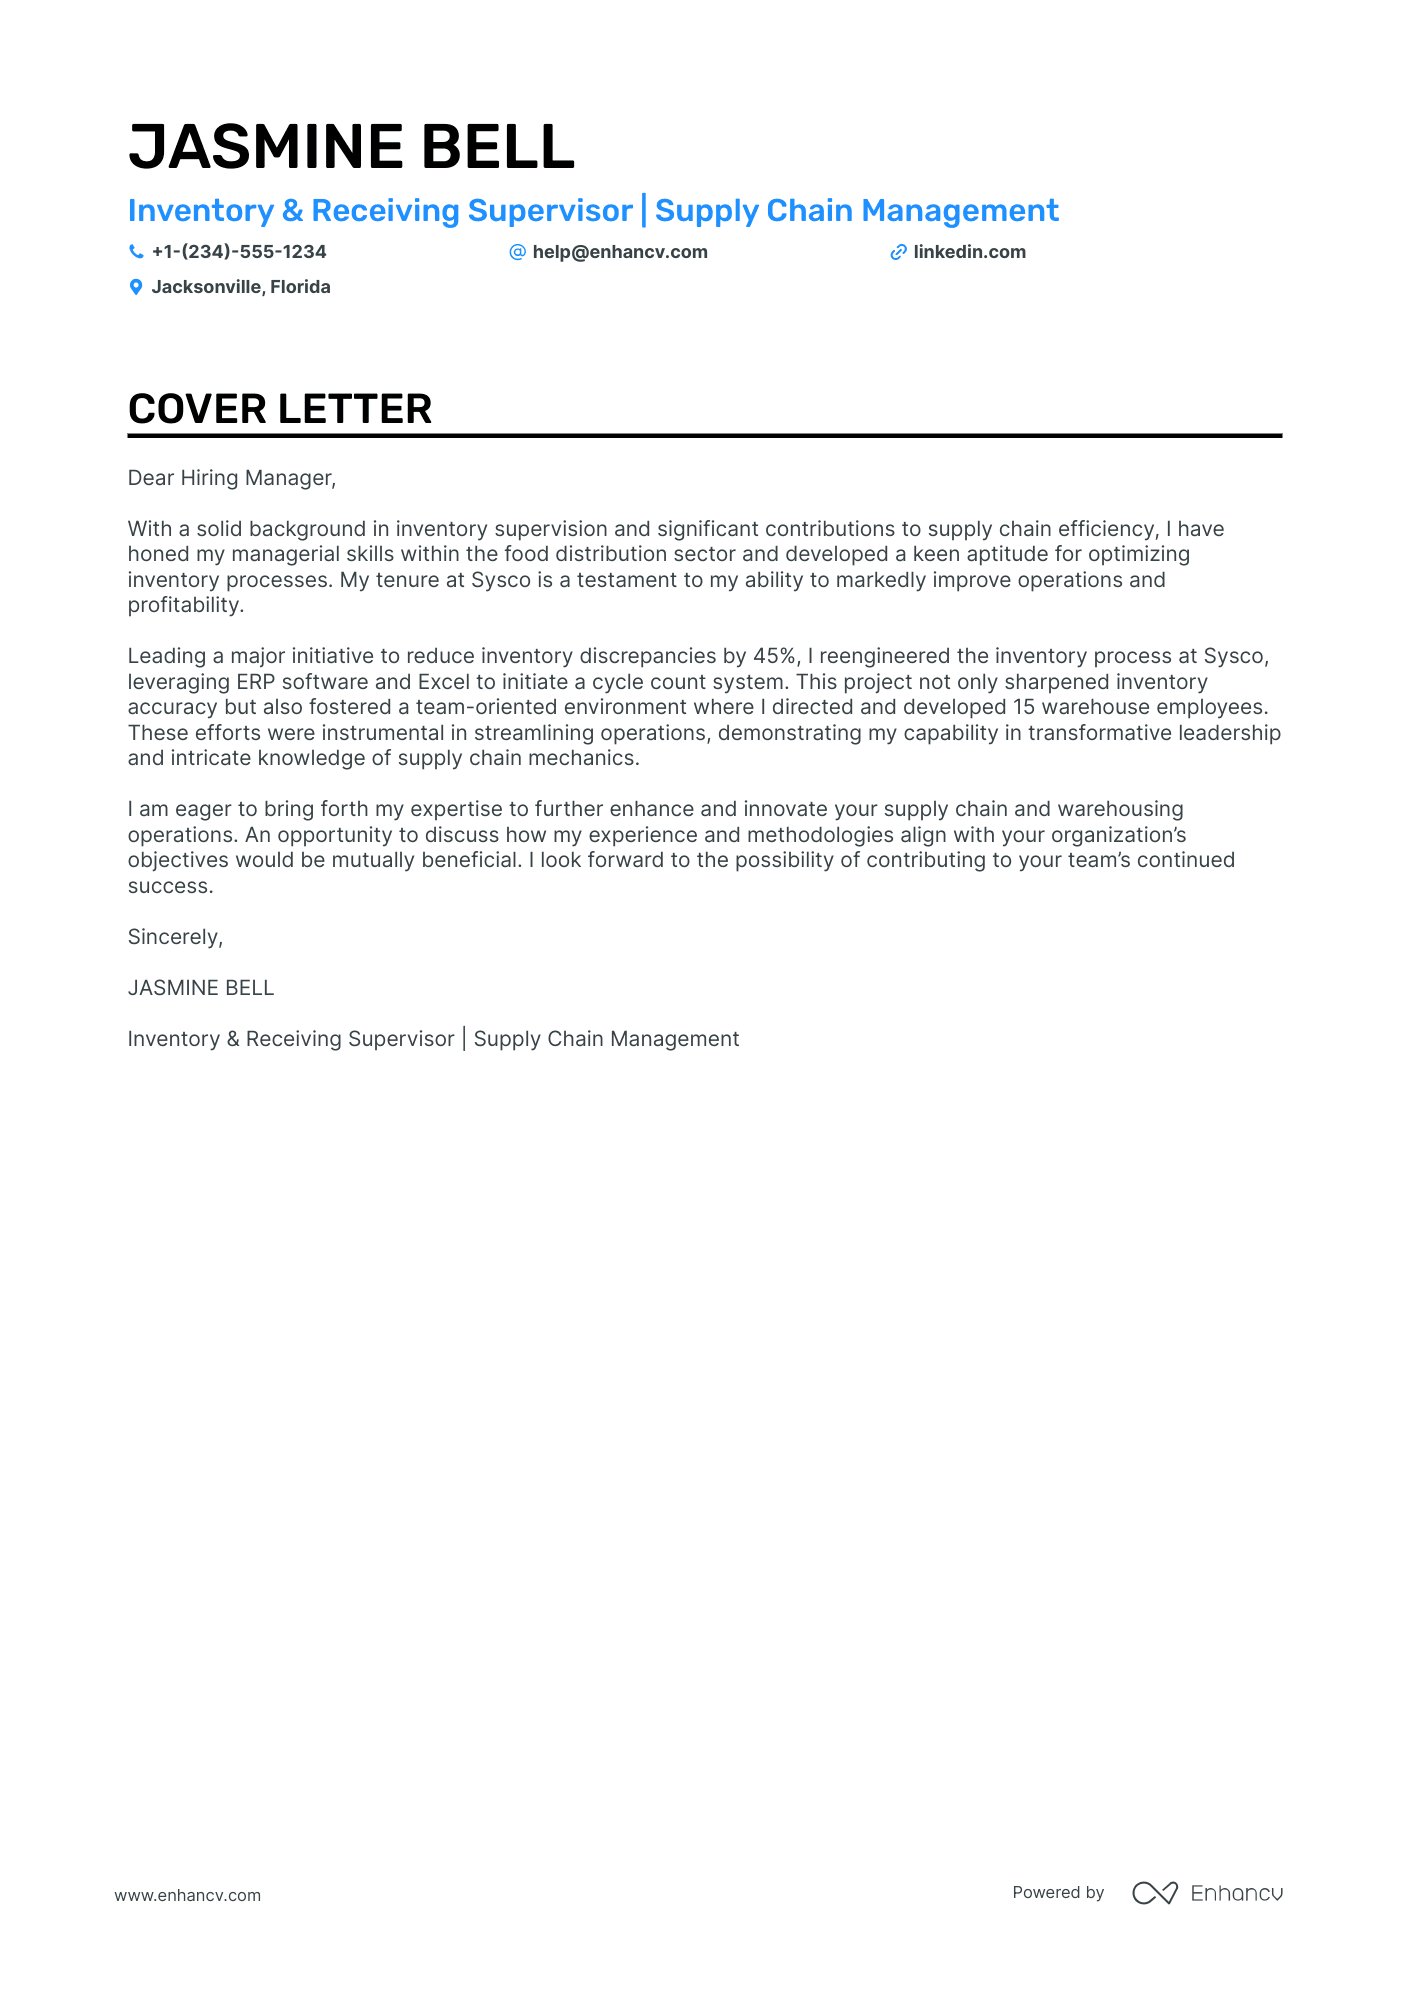 Inventory Supervisor cover letter